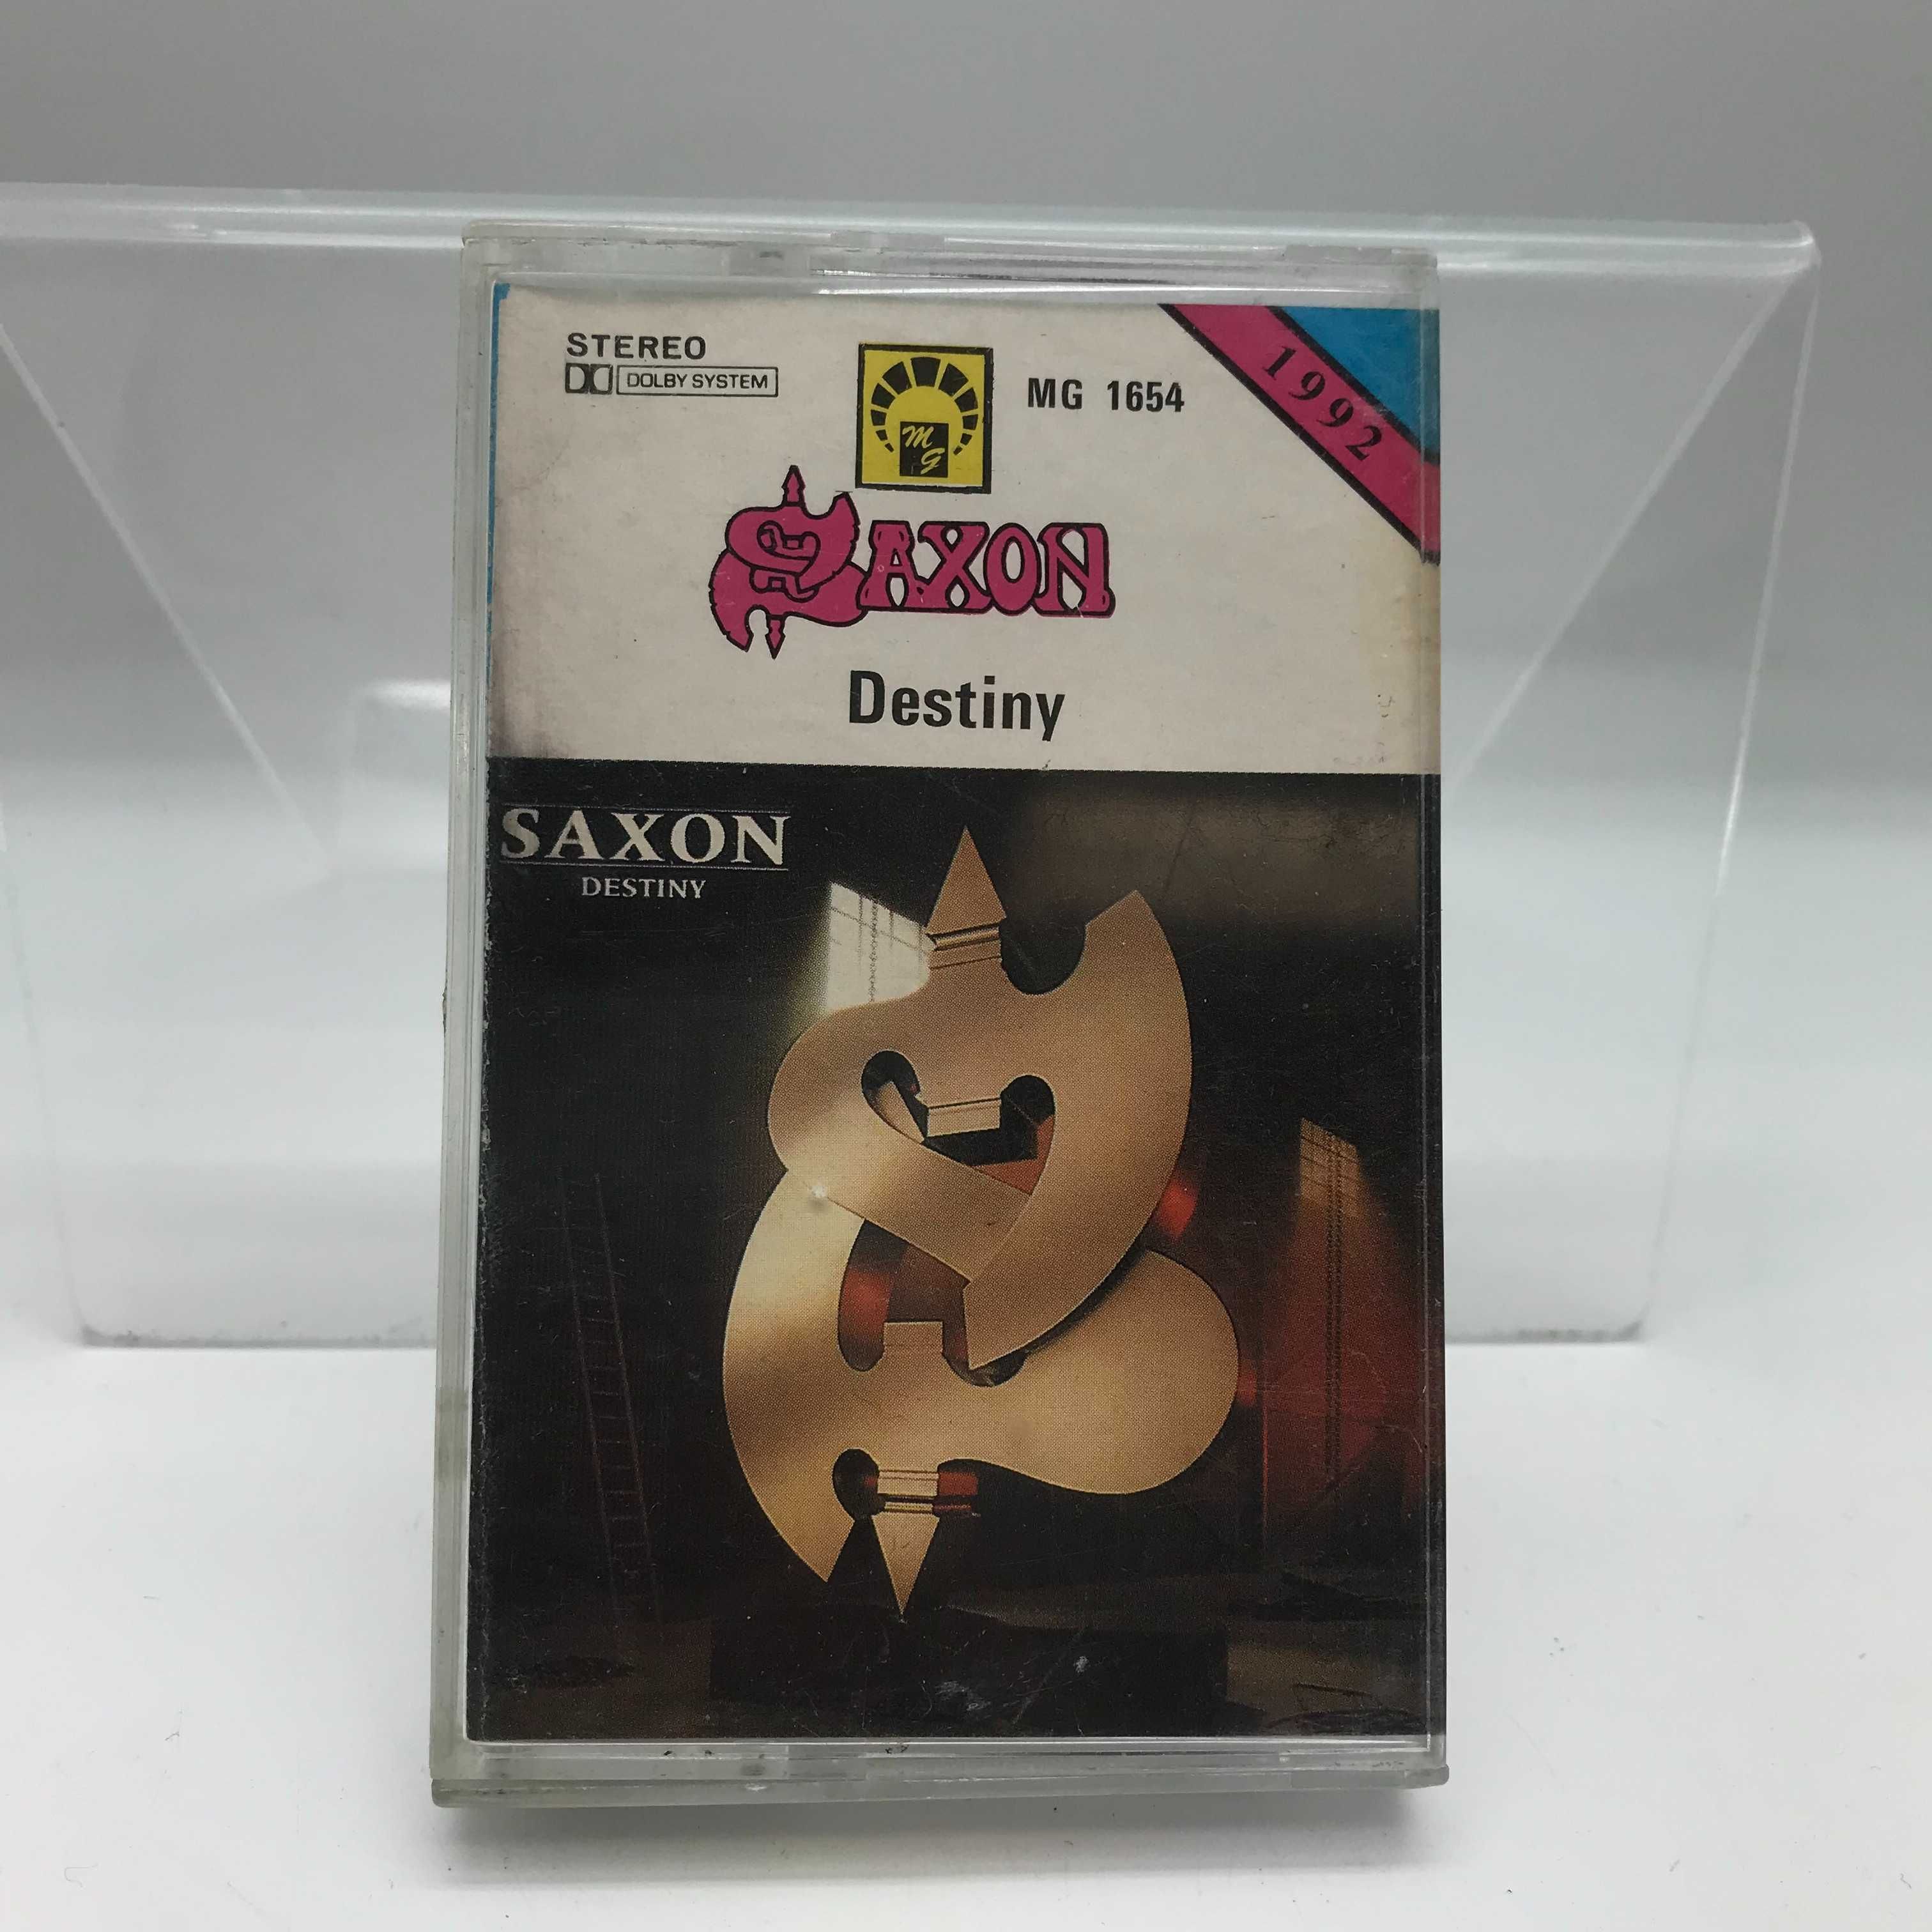 kaseta saxon destiny (3367)